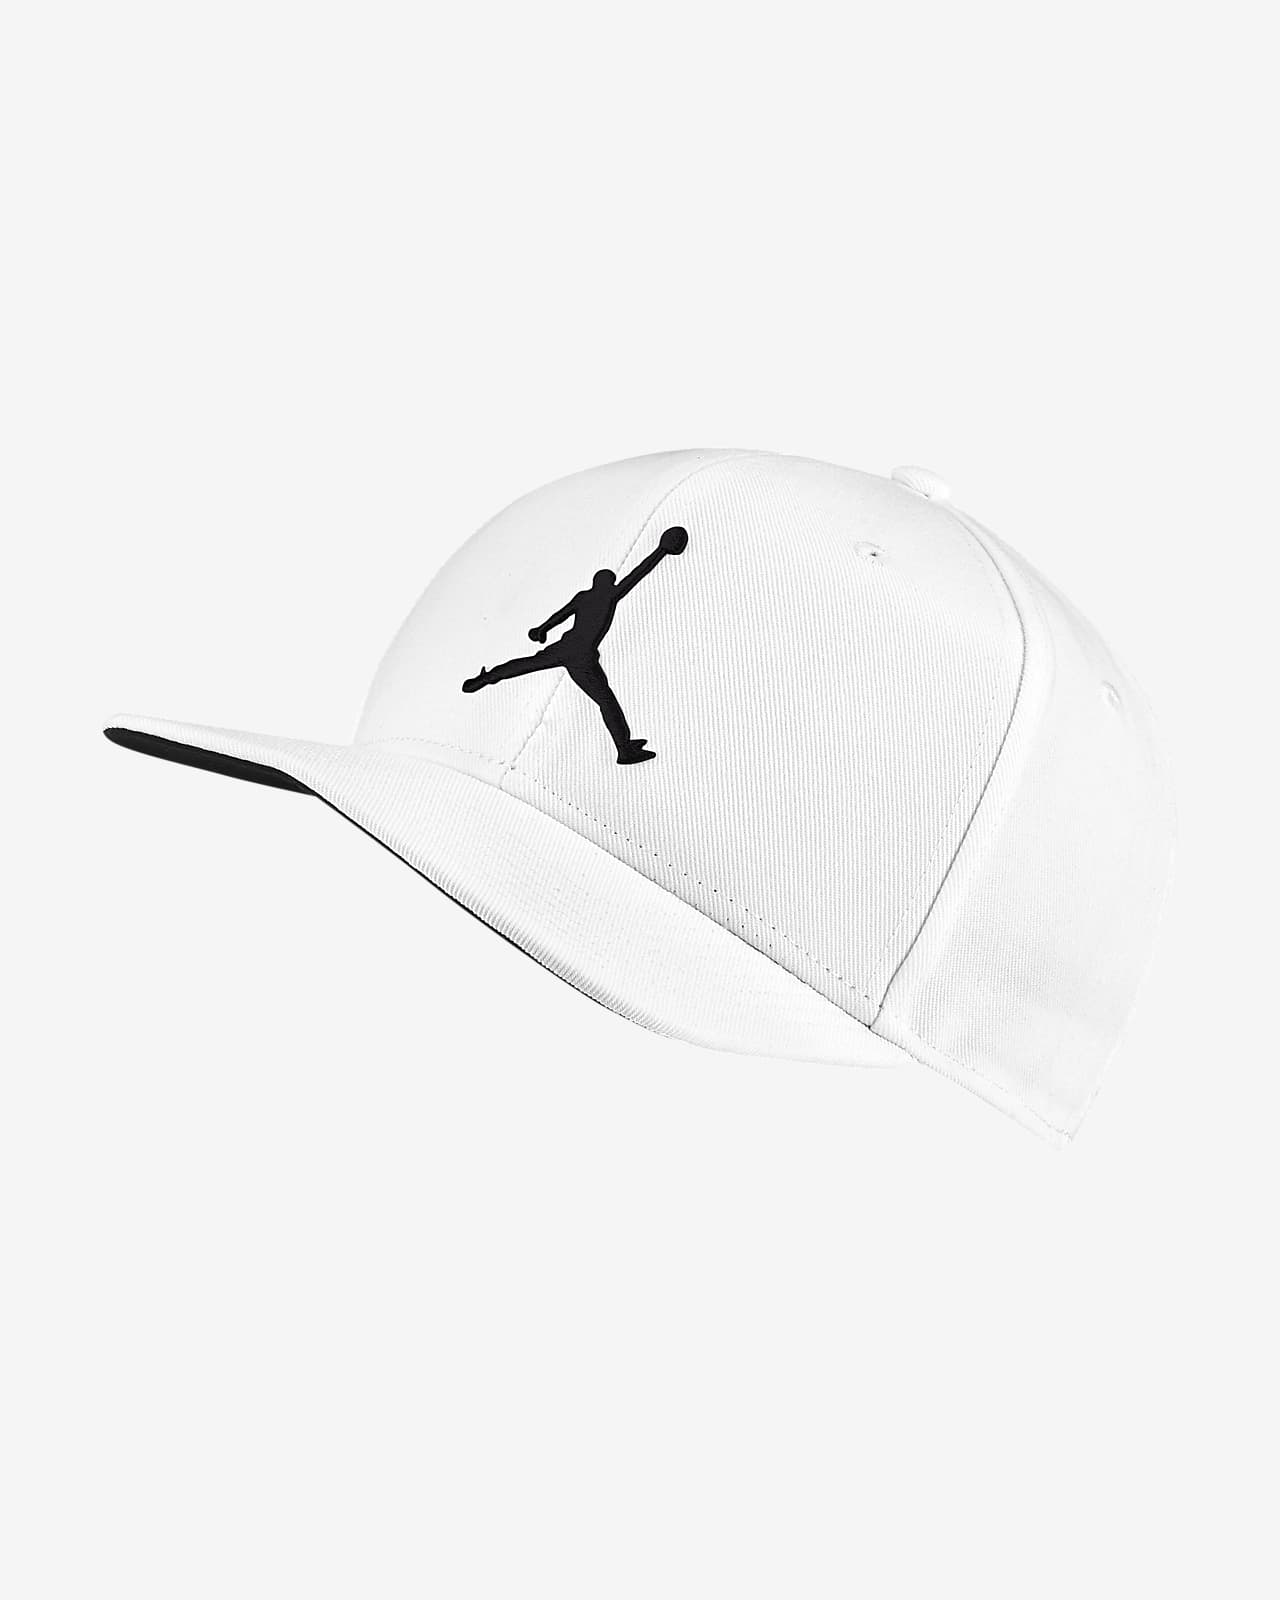 Jordan Pro Jumpman Snapback Hat